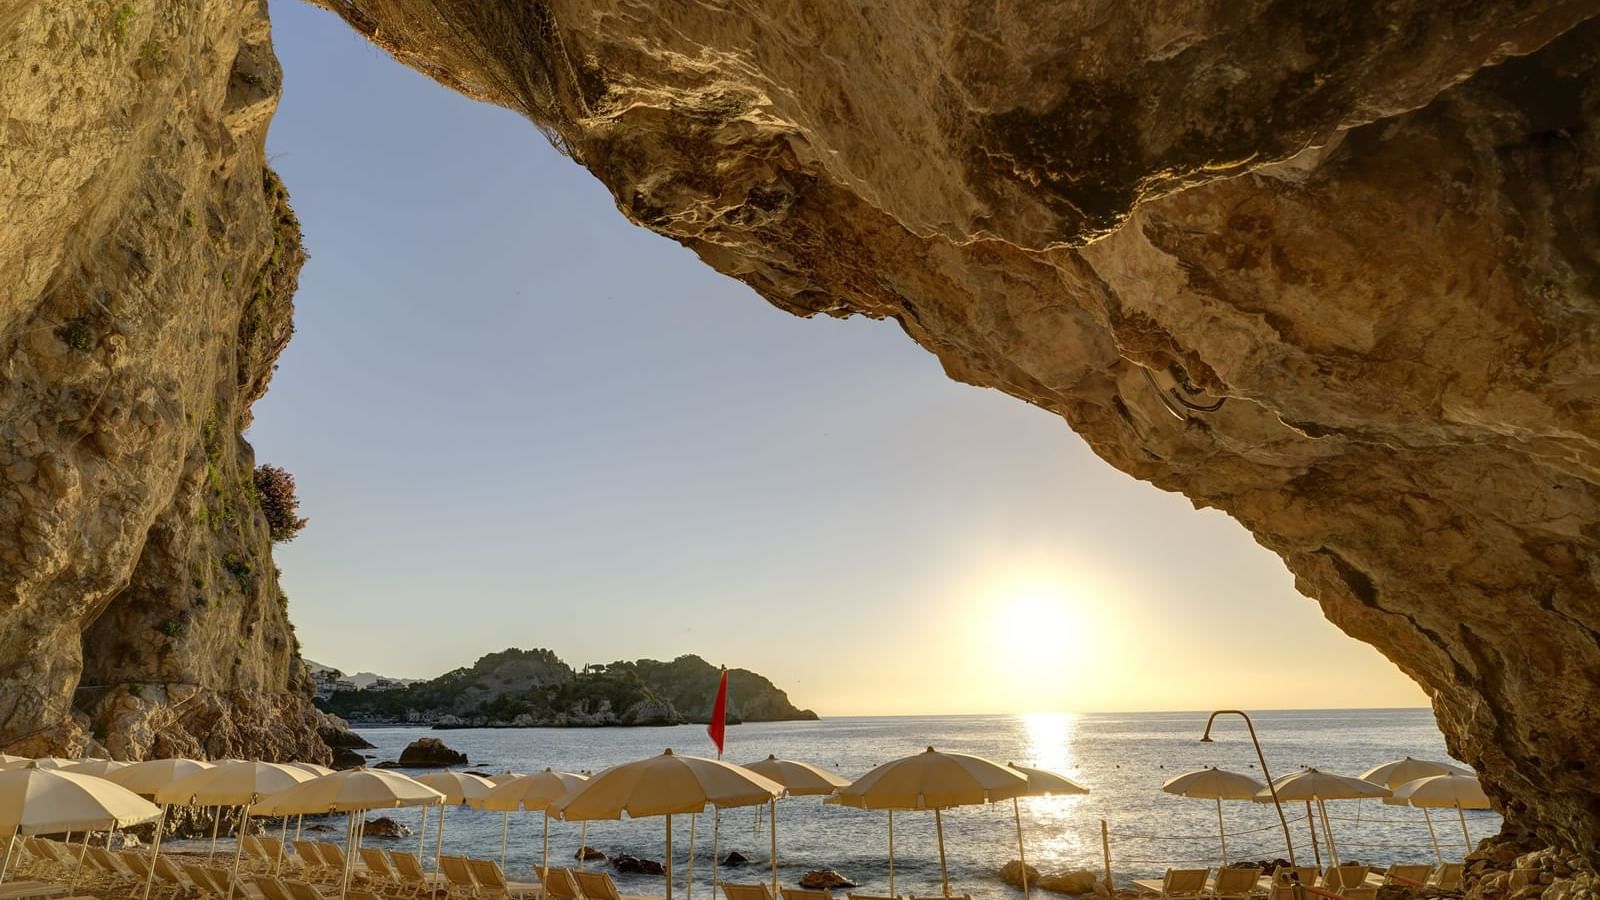 Breathtaking views of the Sicilia coast